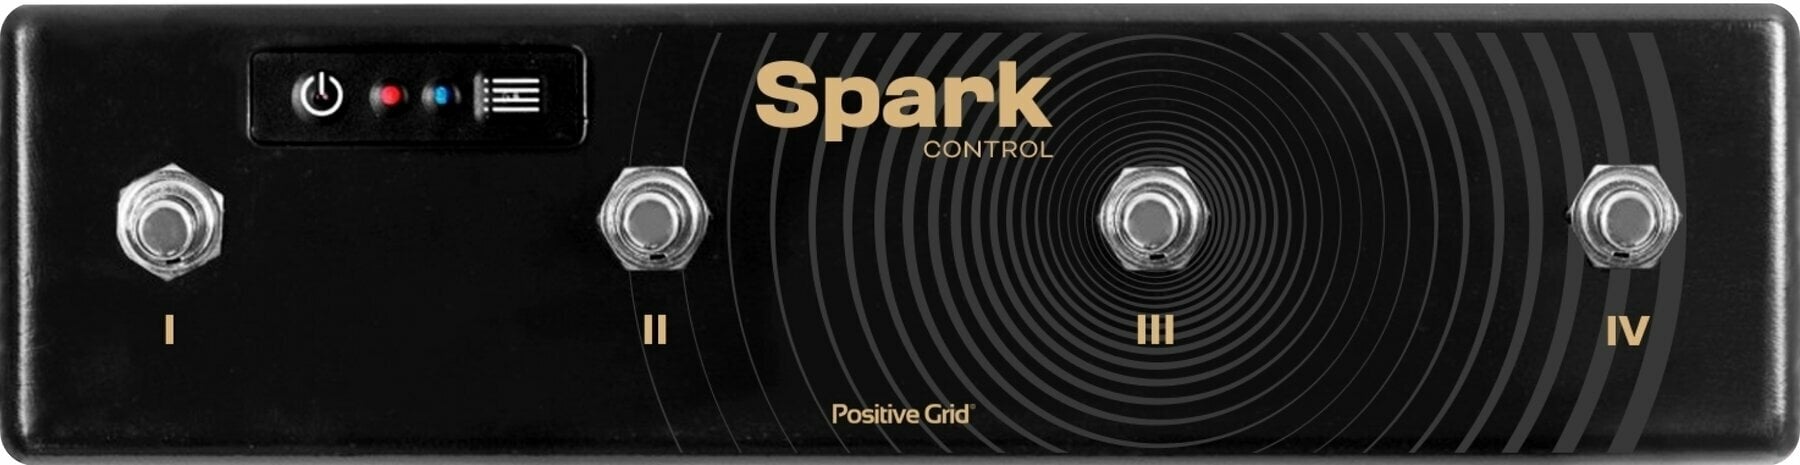 Fußschalter Positive Grid Spark Control Fußschalter